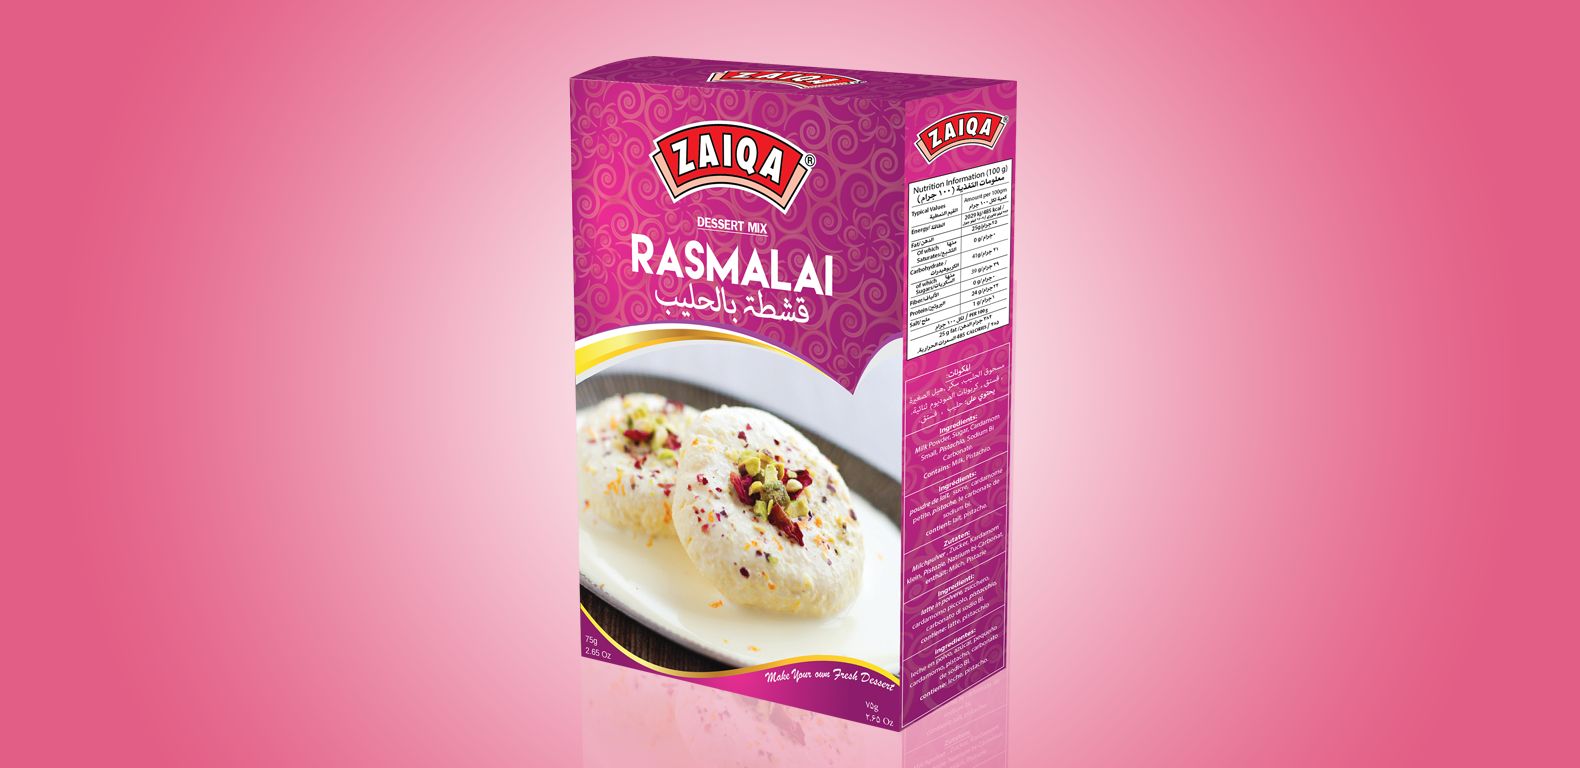 Packaging-Design-Zaiqa-Desserts-Rasmalai